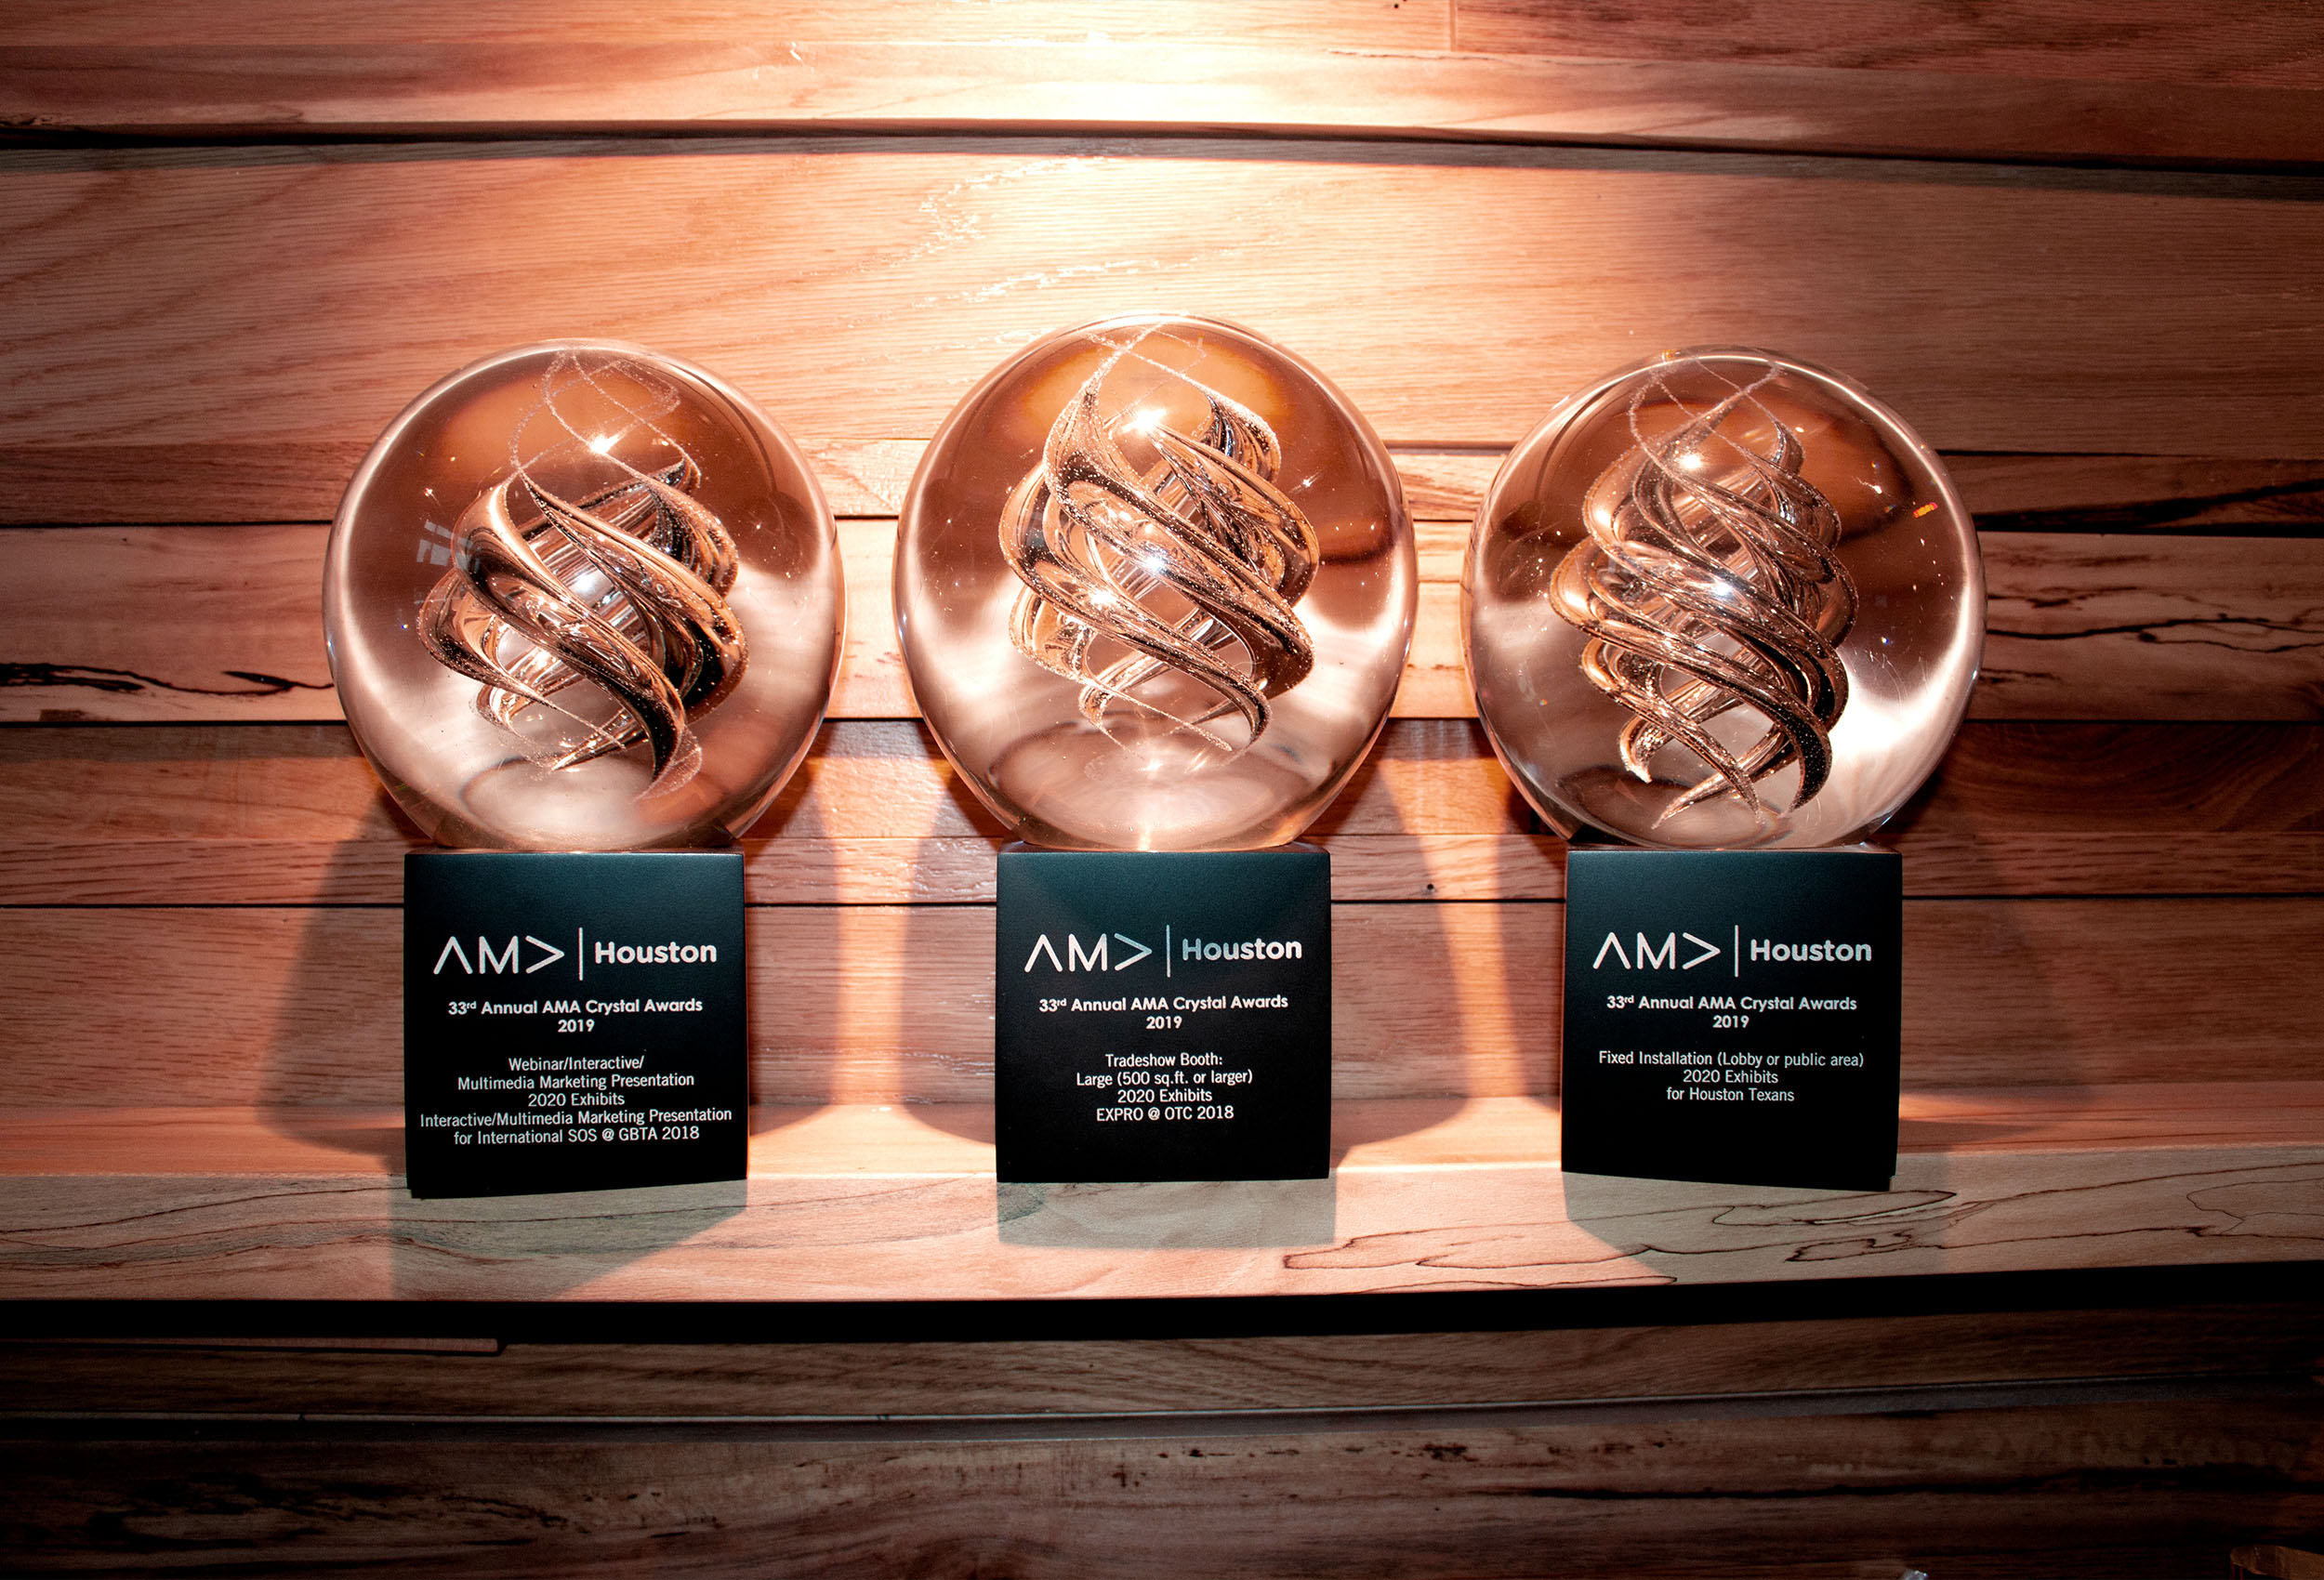 2020 Exhibits Wins Three AMA Crystal Awards_2500x1700